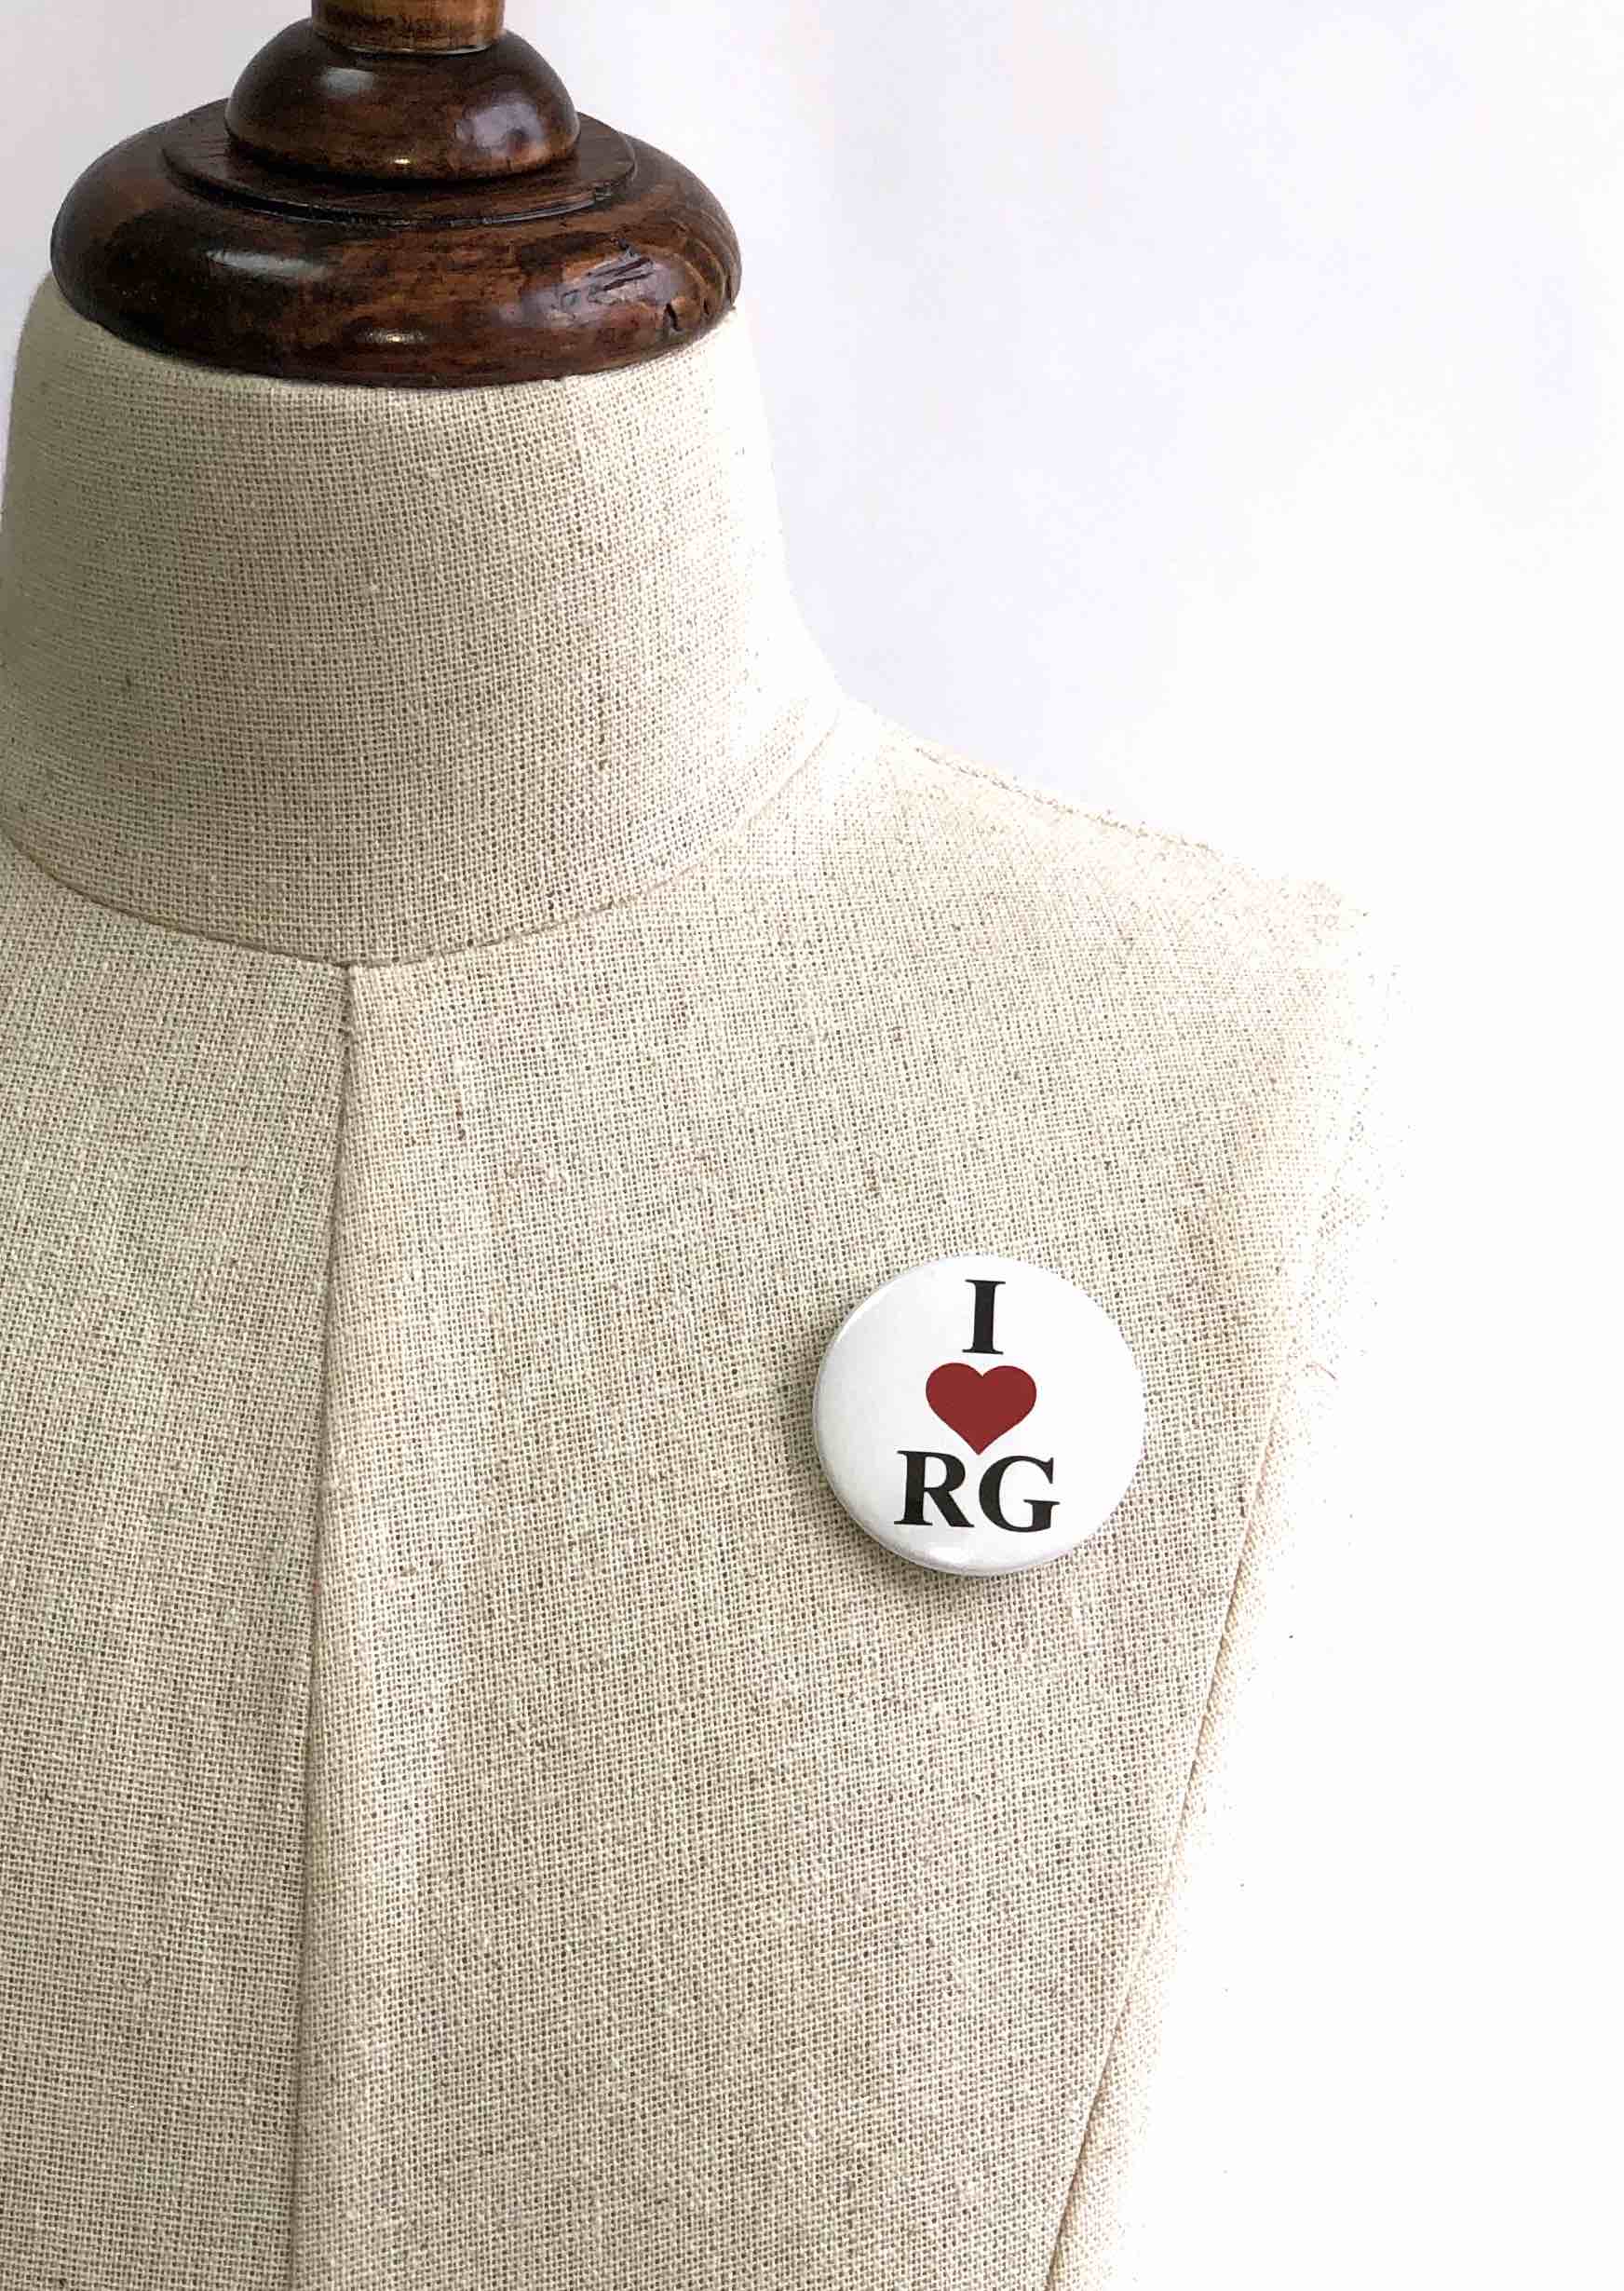 Pin Badge " I love RG" - OneSports.ae